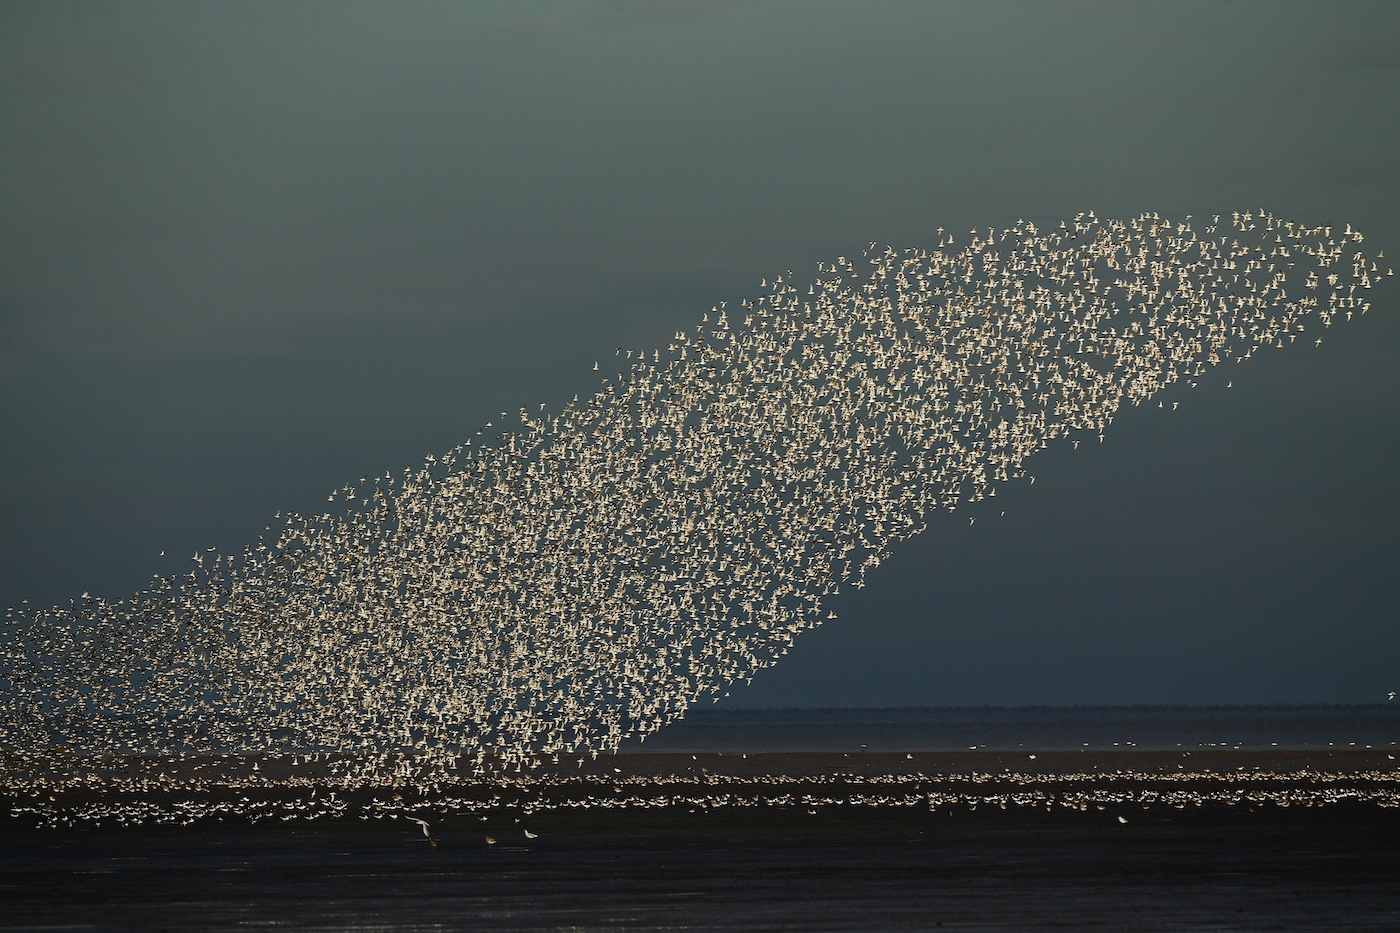 flocks of birds flying in patterns